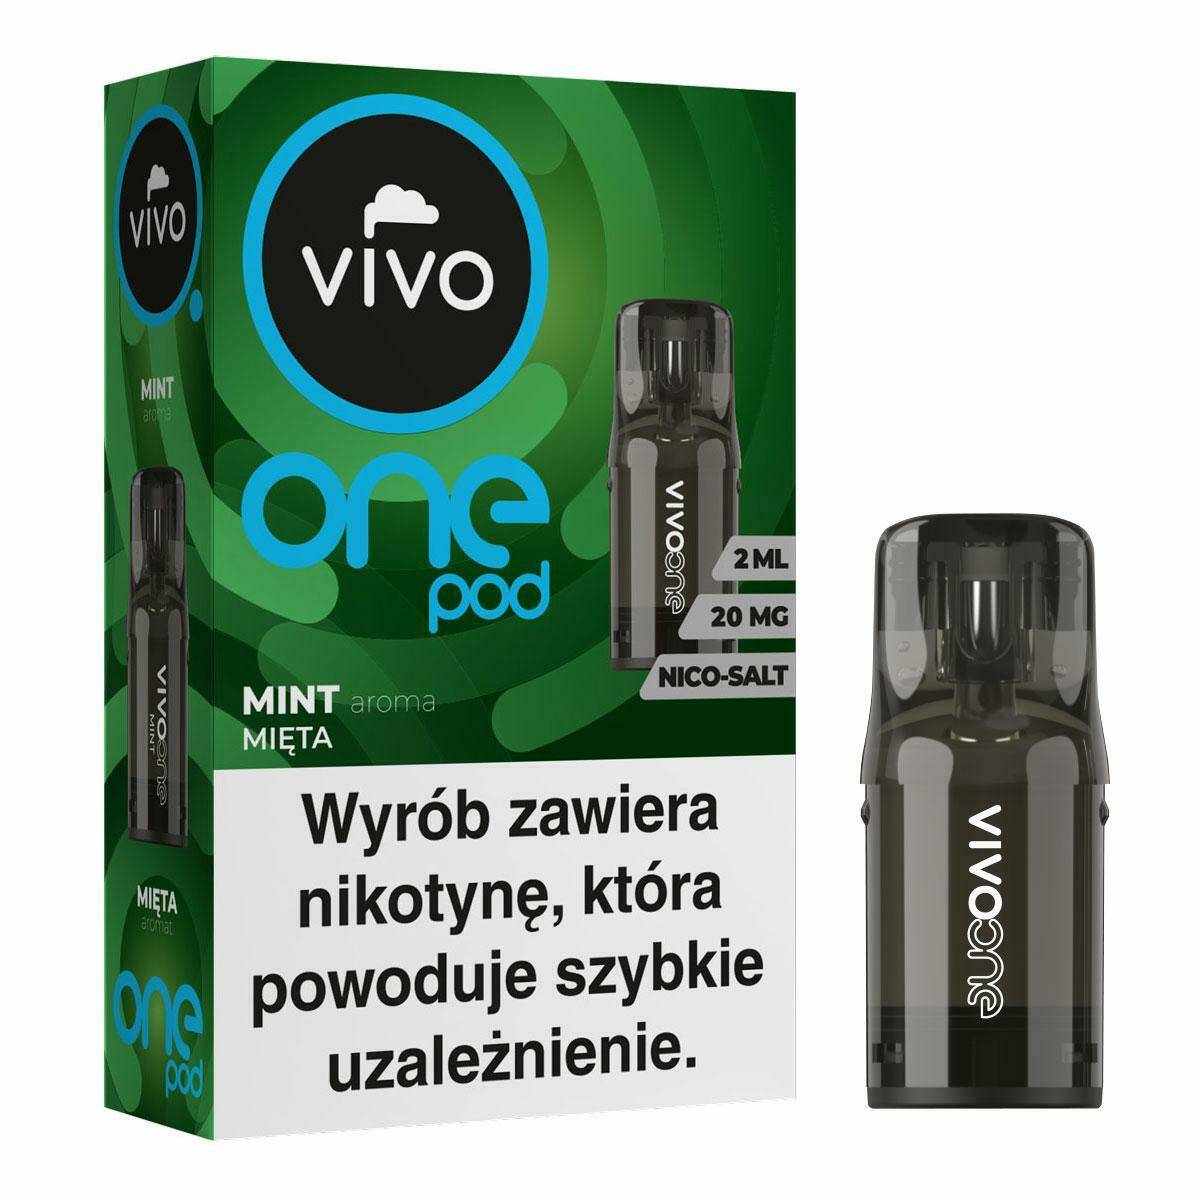 VIVO ONE POD - Mint 20mg (2ml)